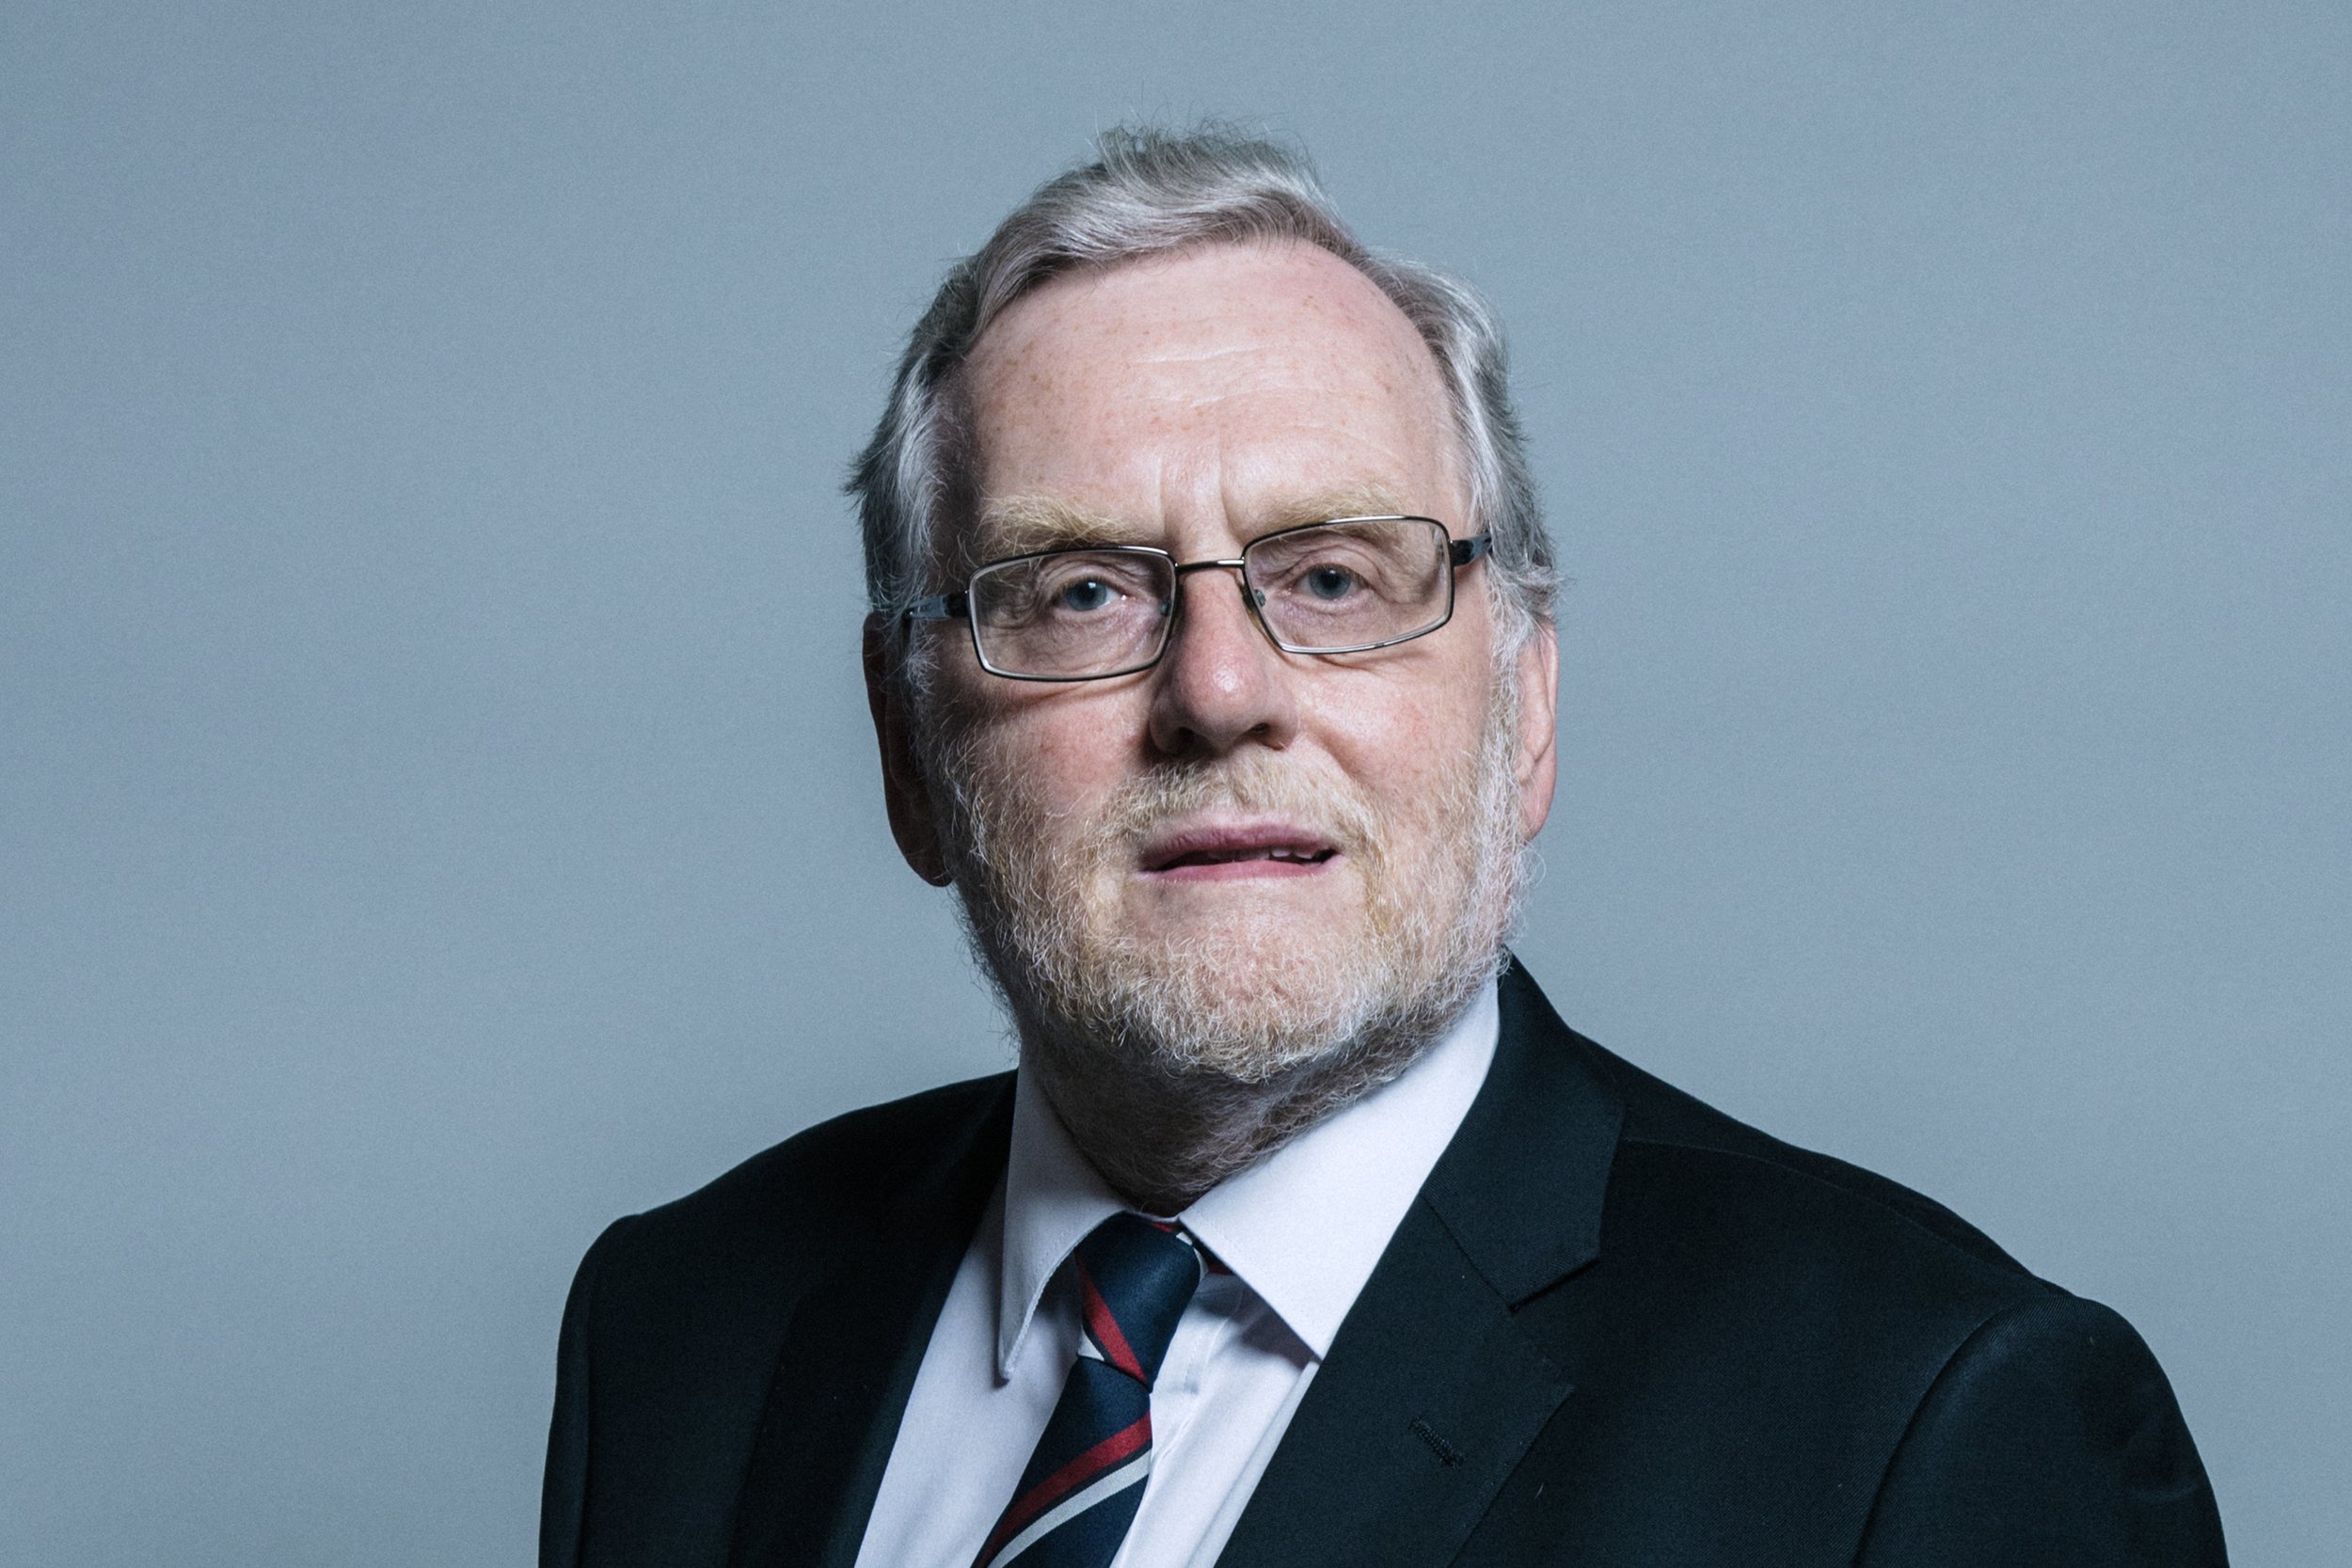 John Spellar MP, Co-Chair